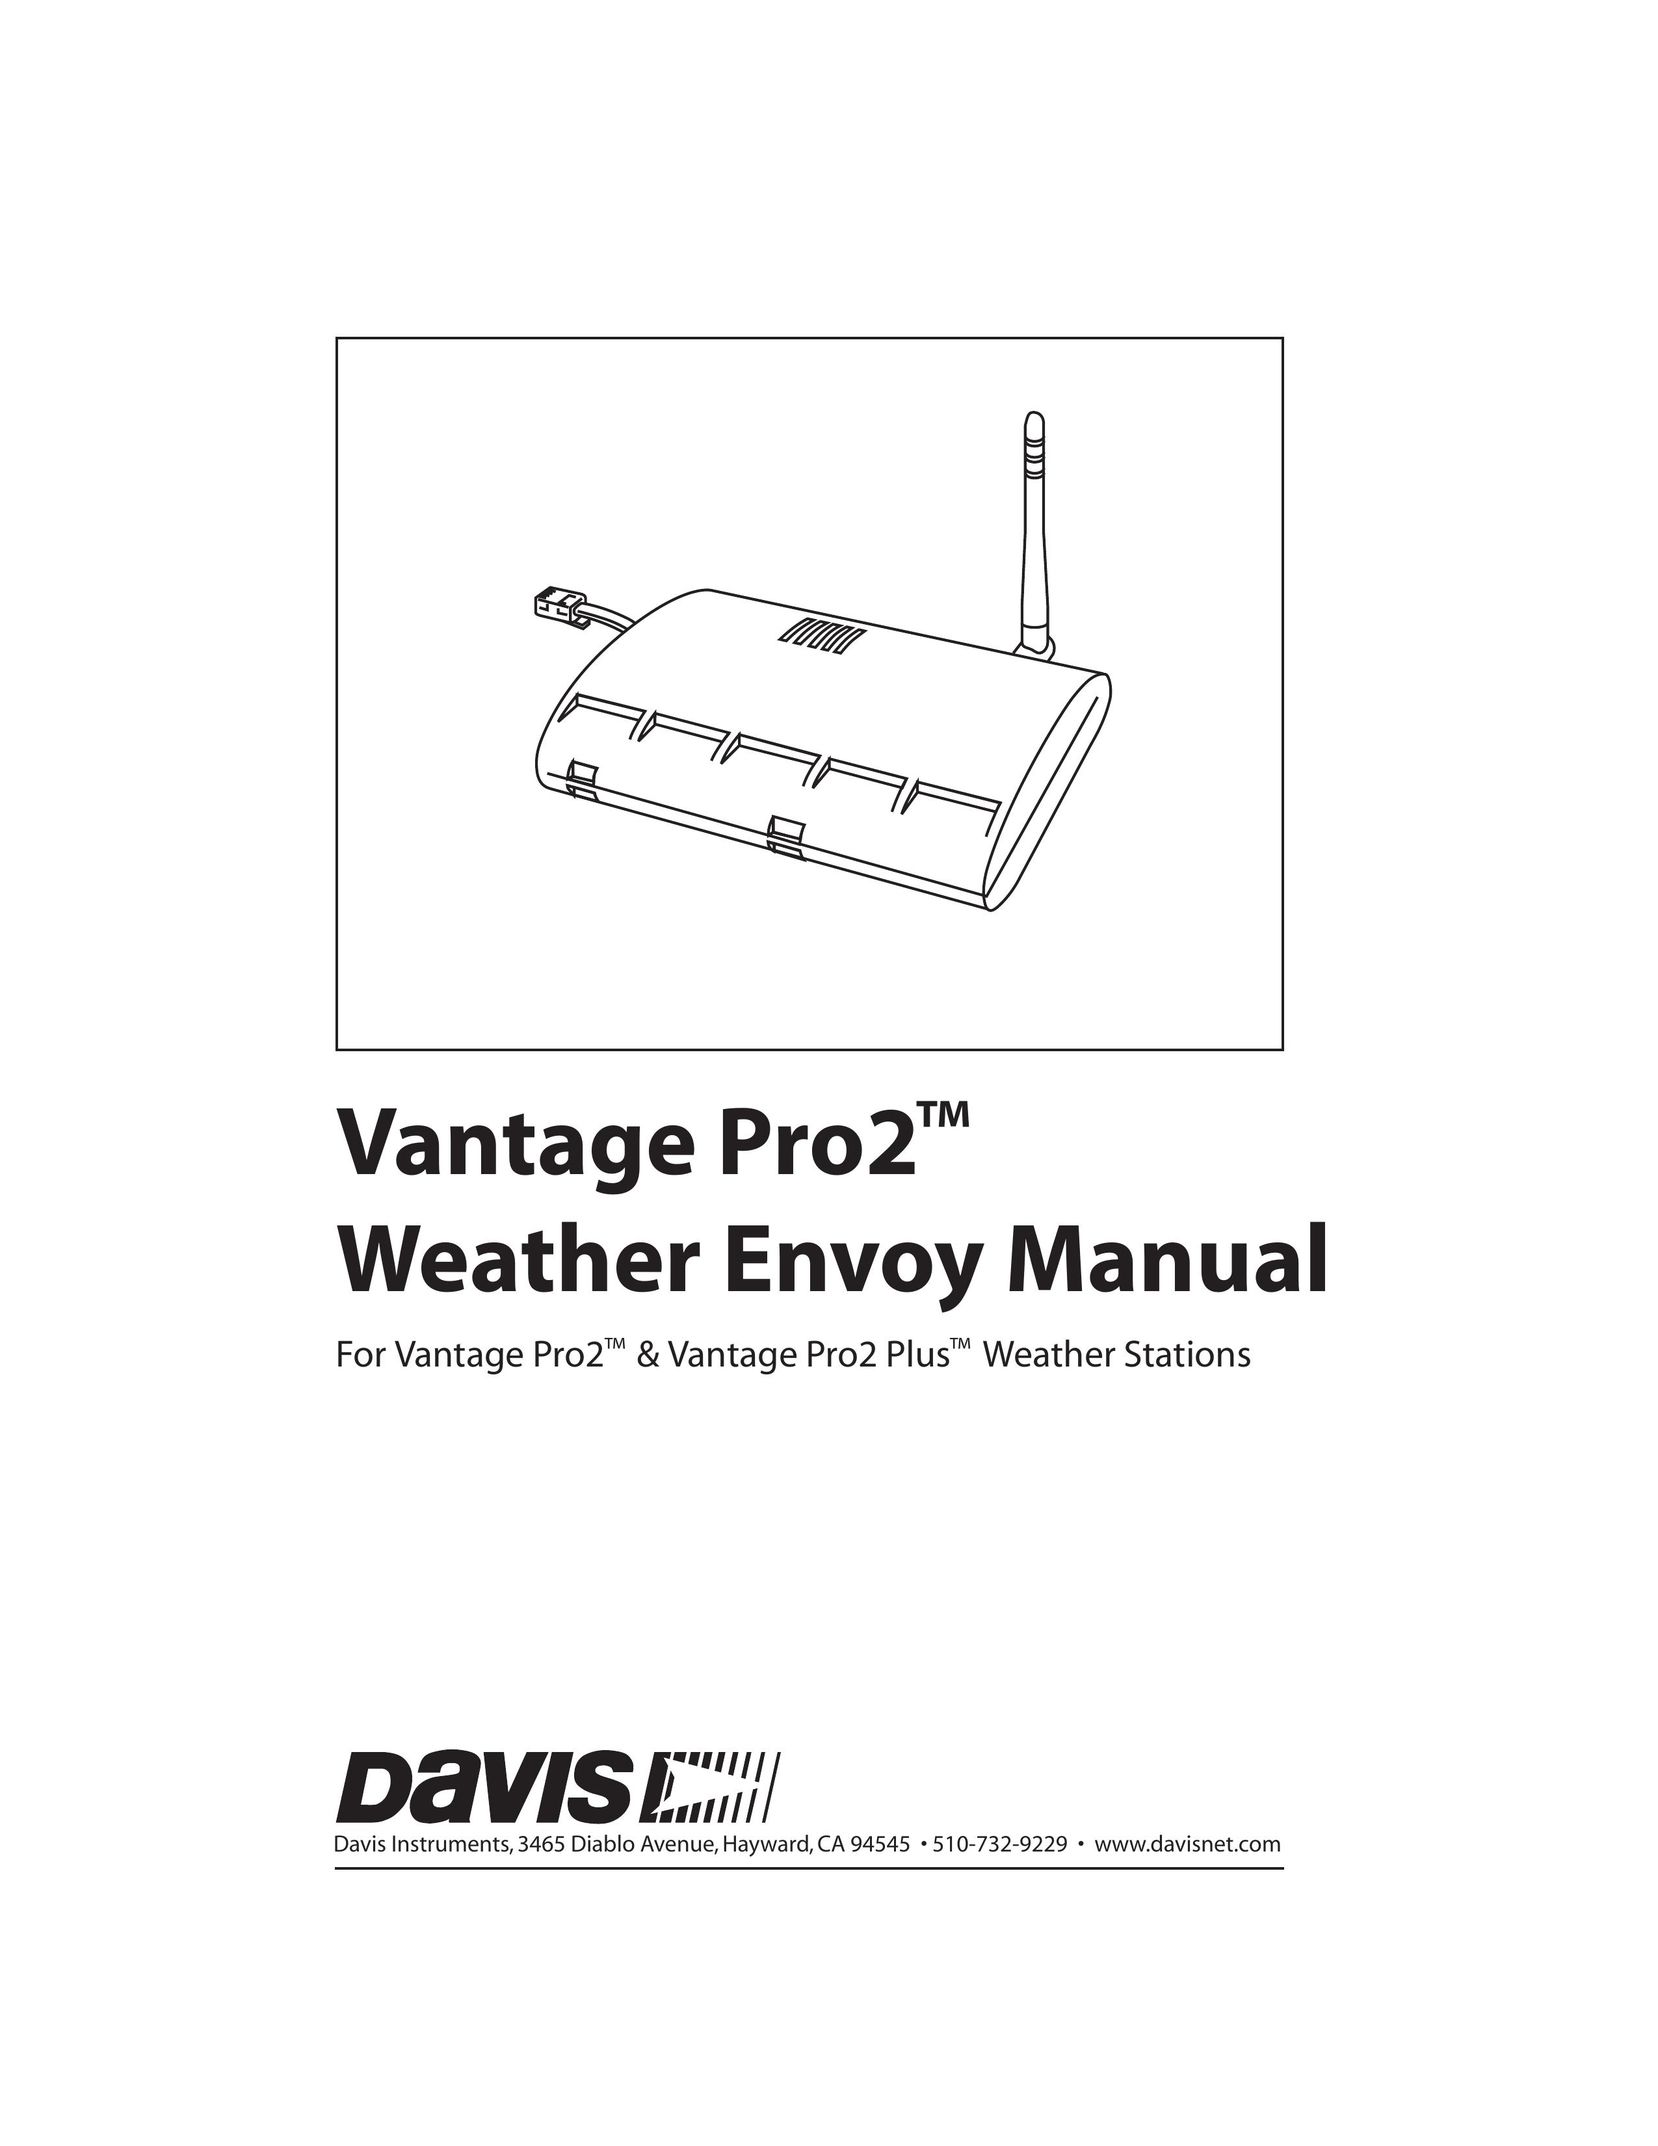 DAVIS Vantage Pro2 Humidifier User Manual